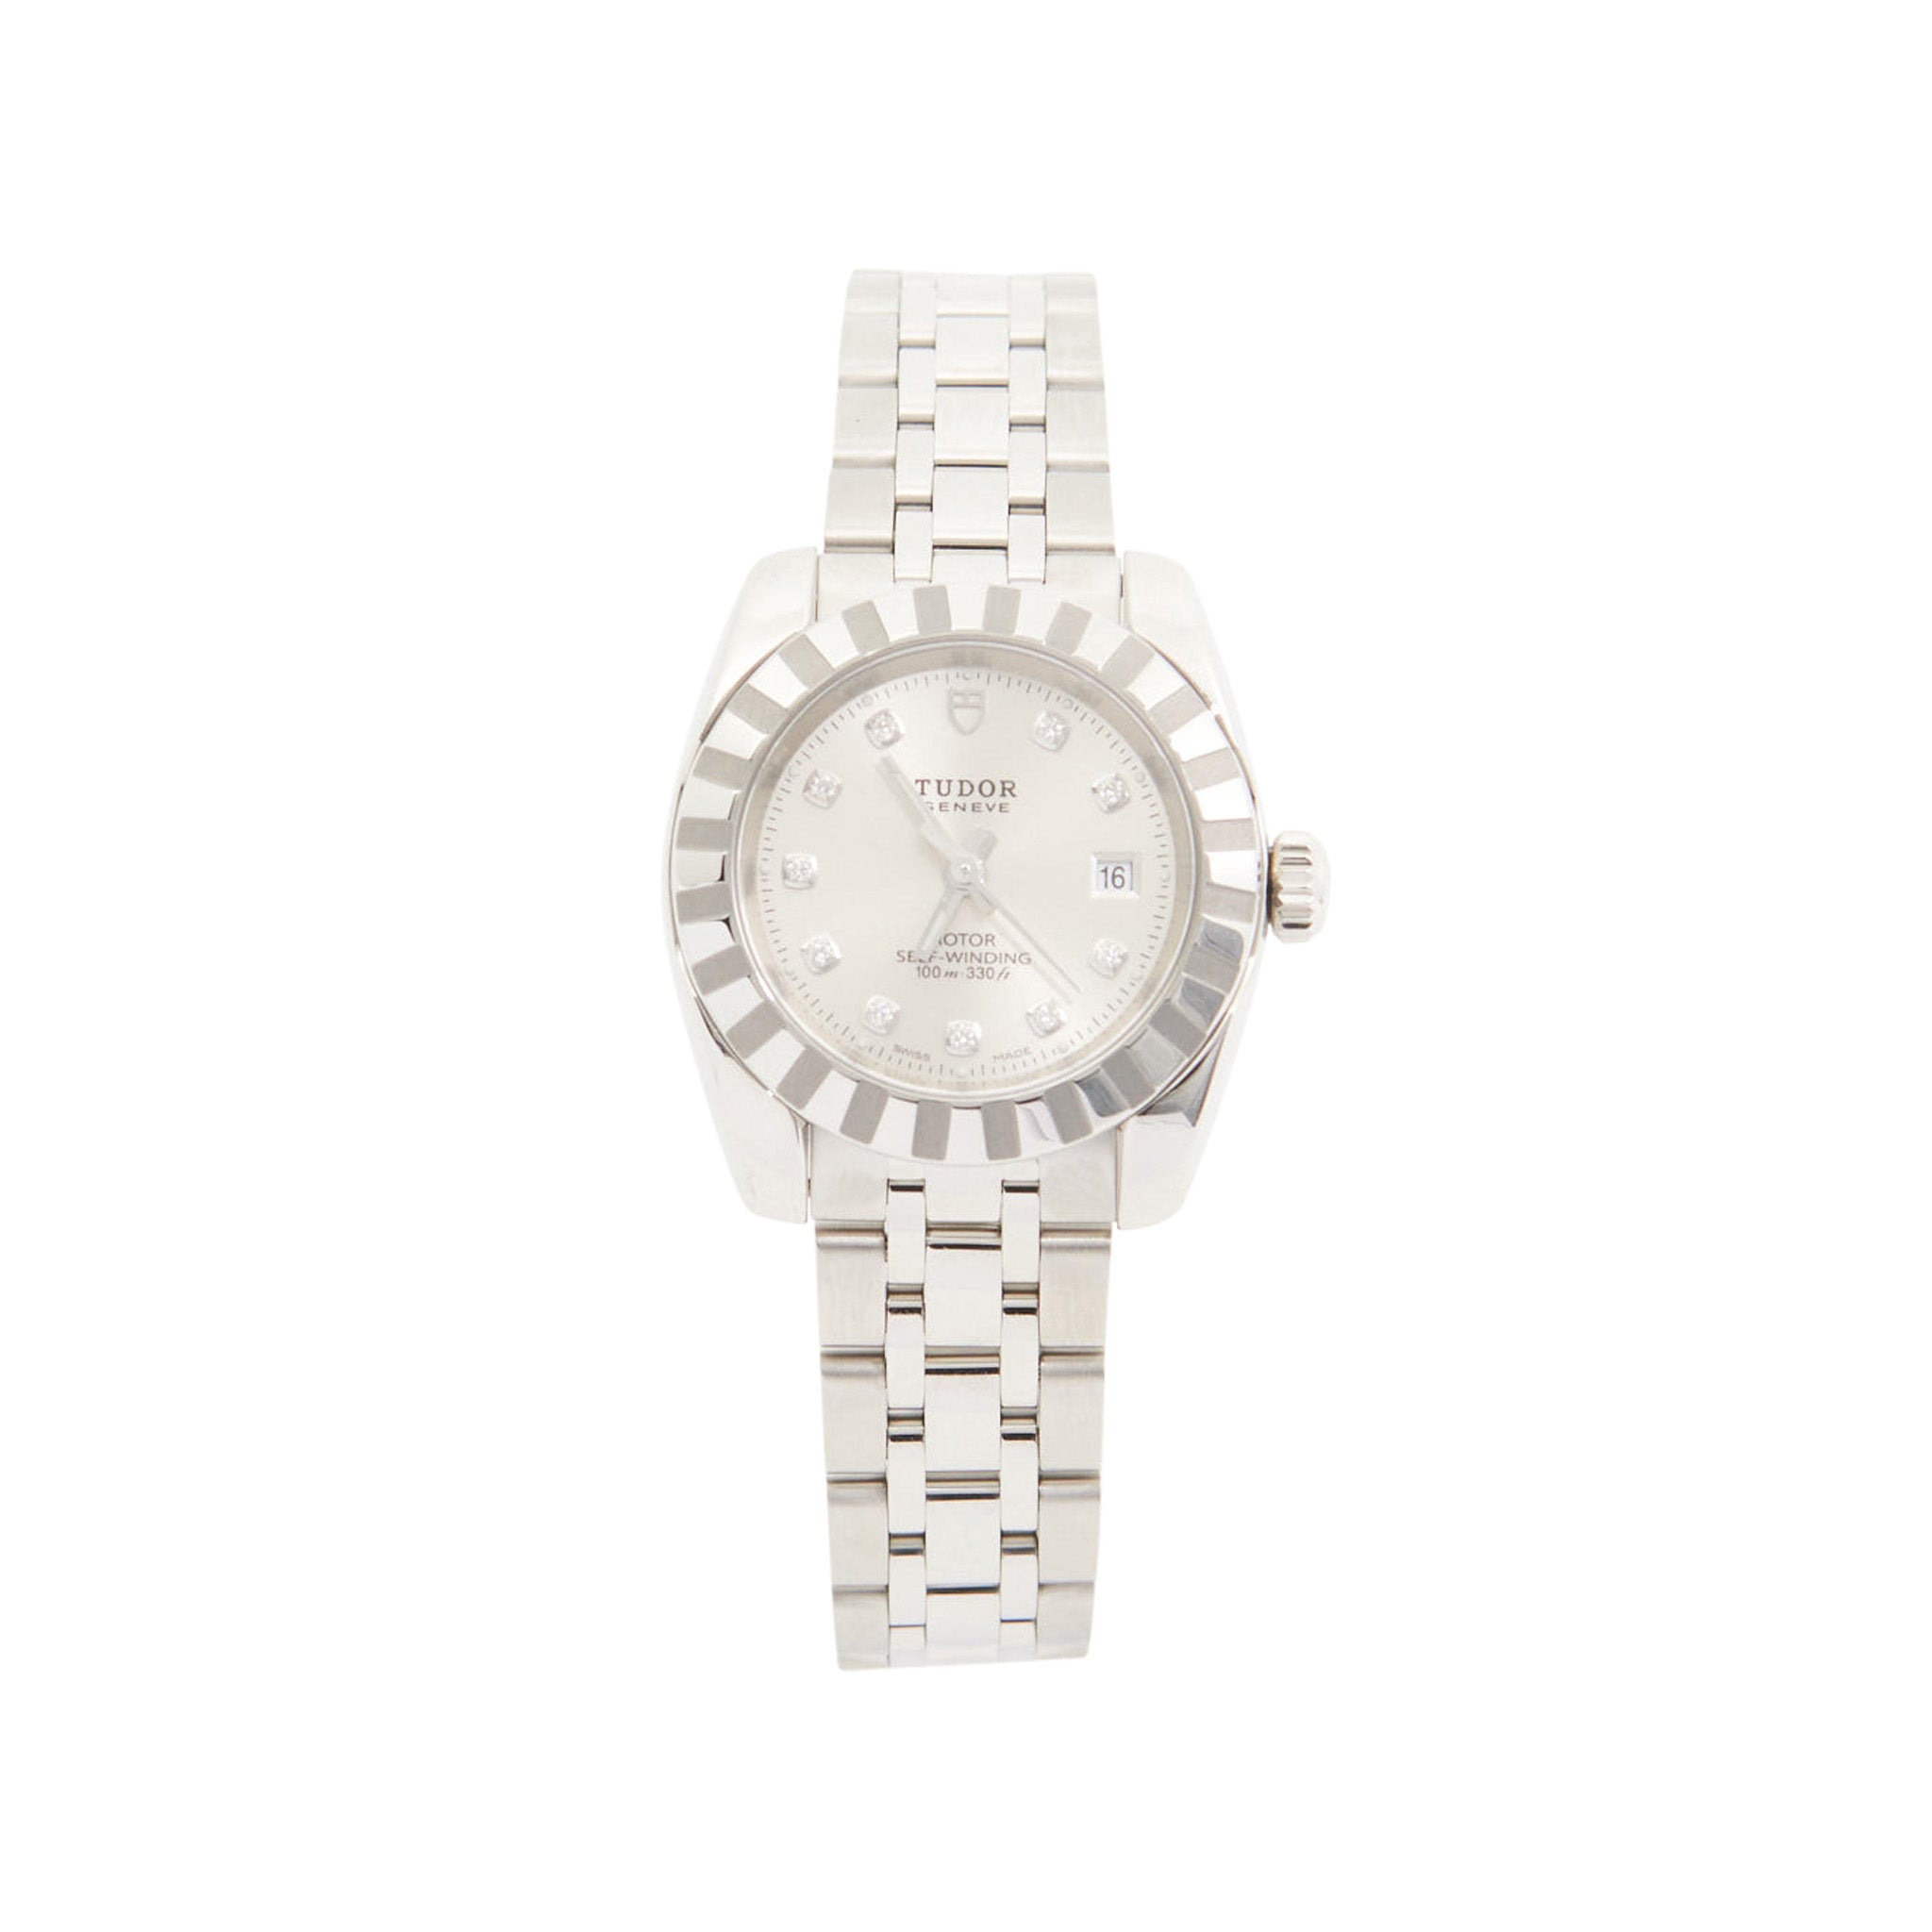 Tudor Classic Date 22010 Watch With Diamonds